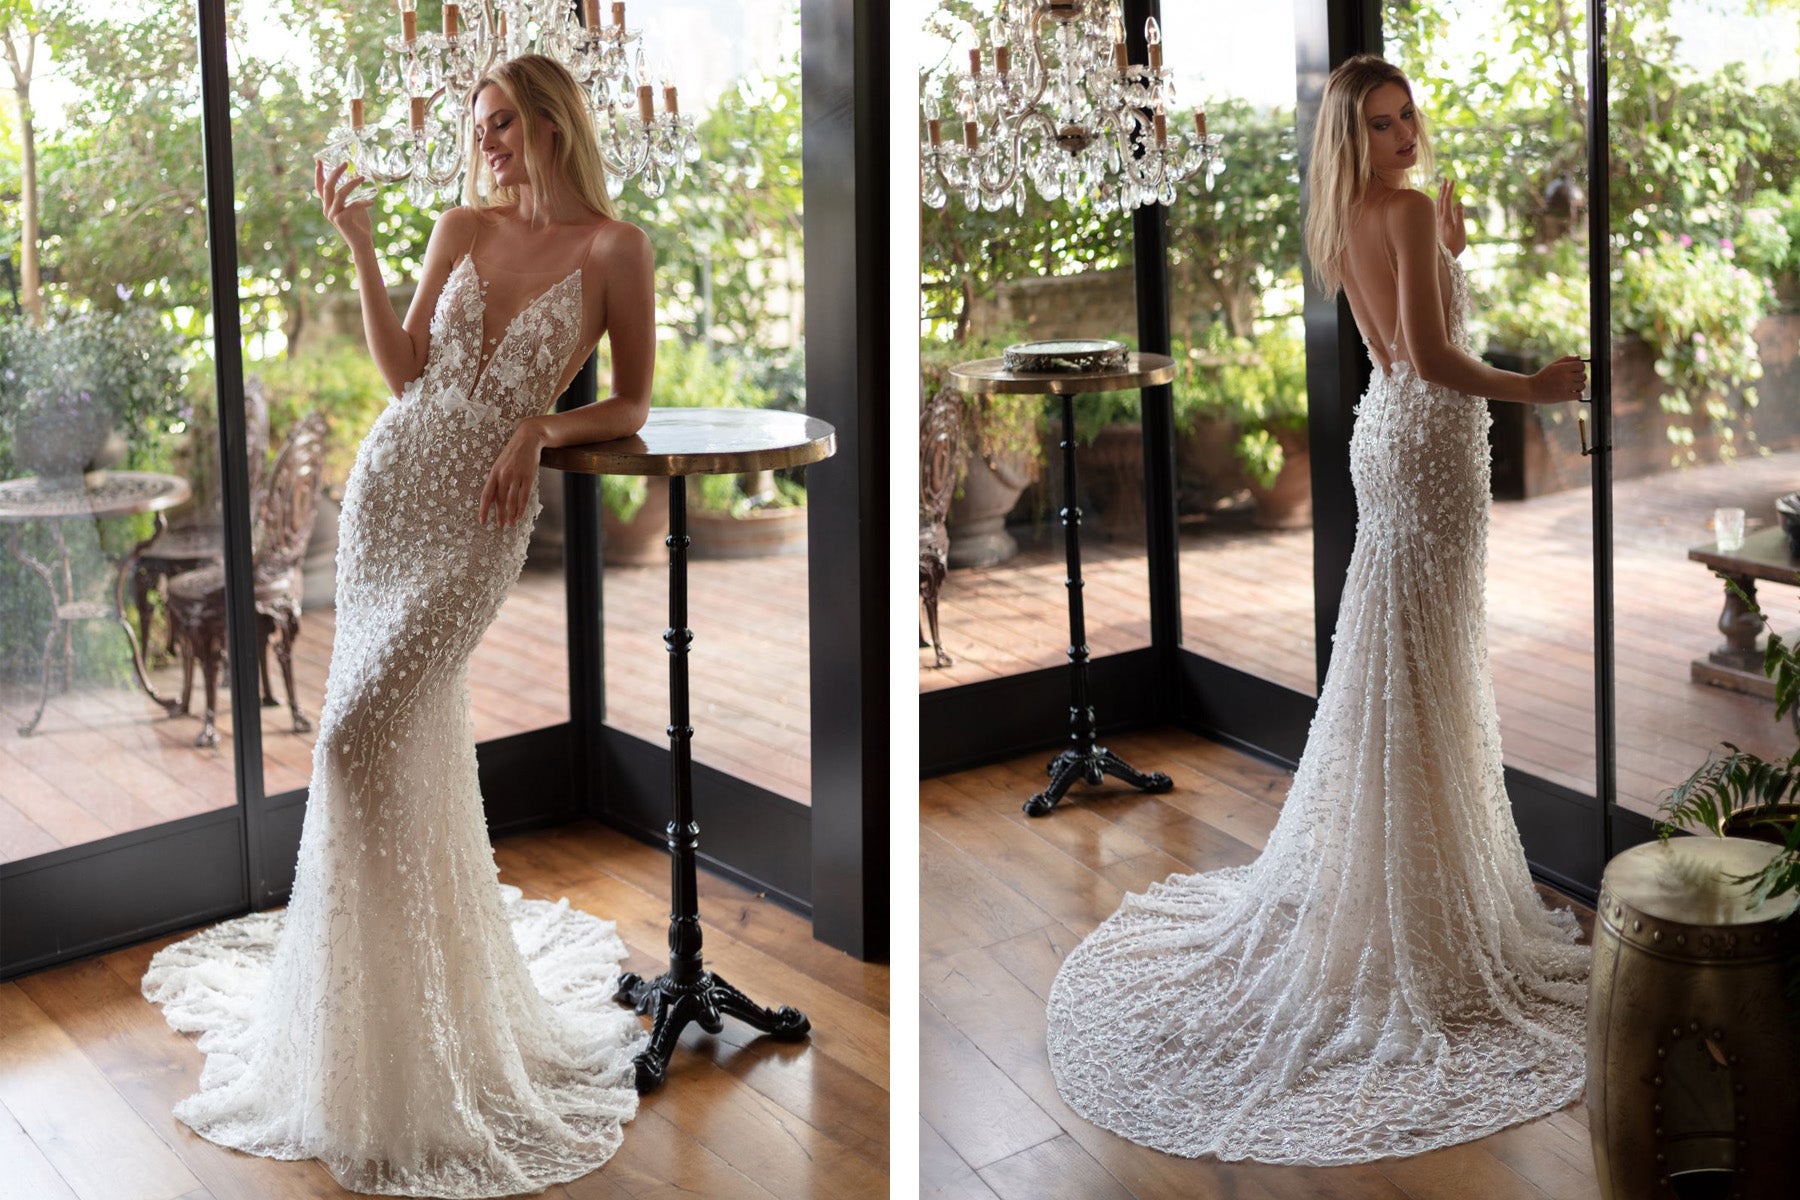 Eternal-bridal-neta-dover-wedding-dress-Felice